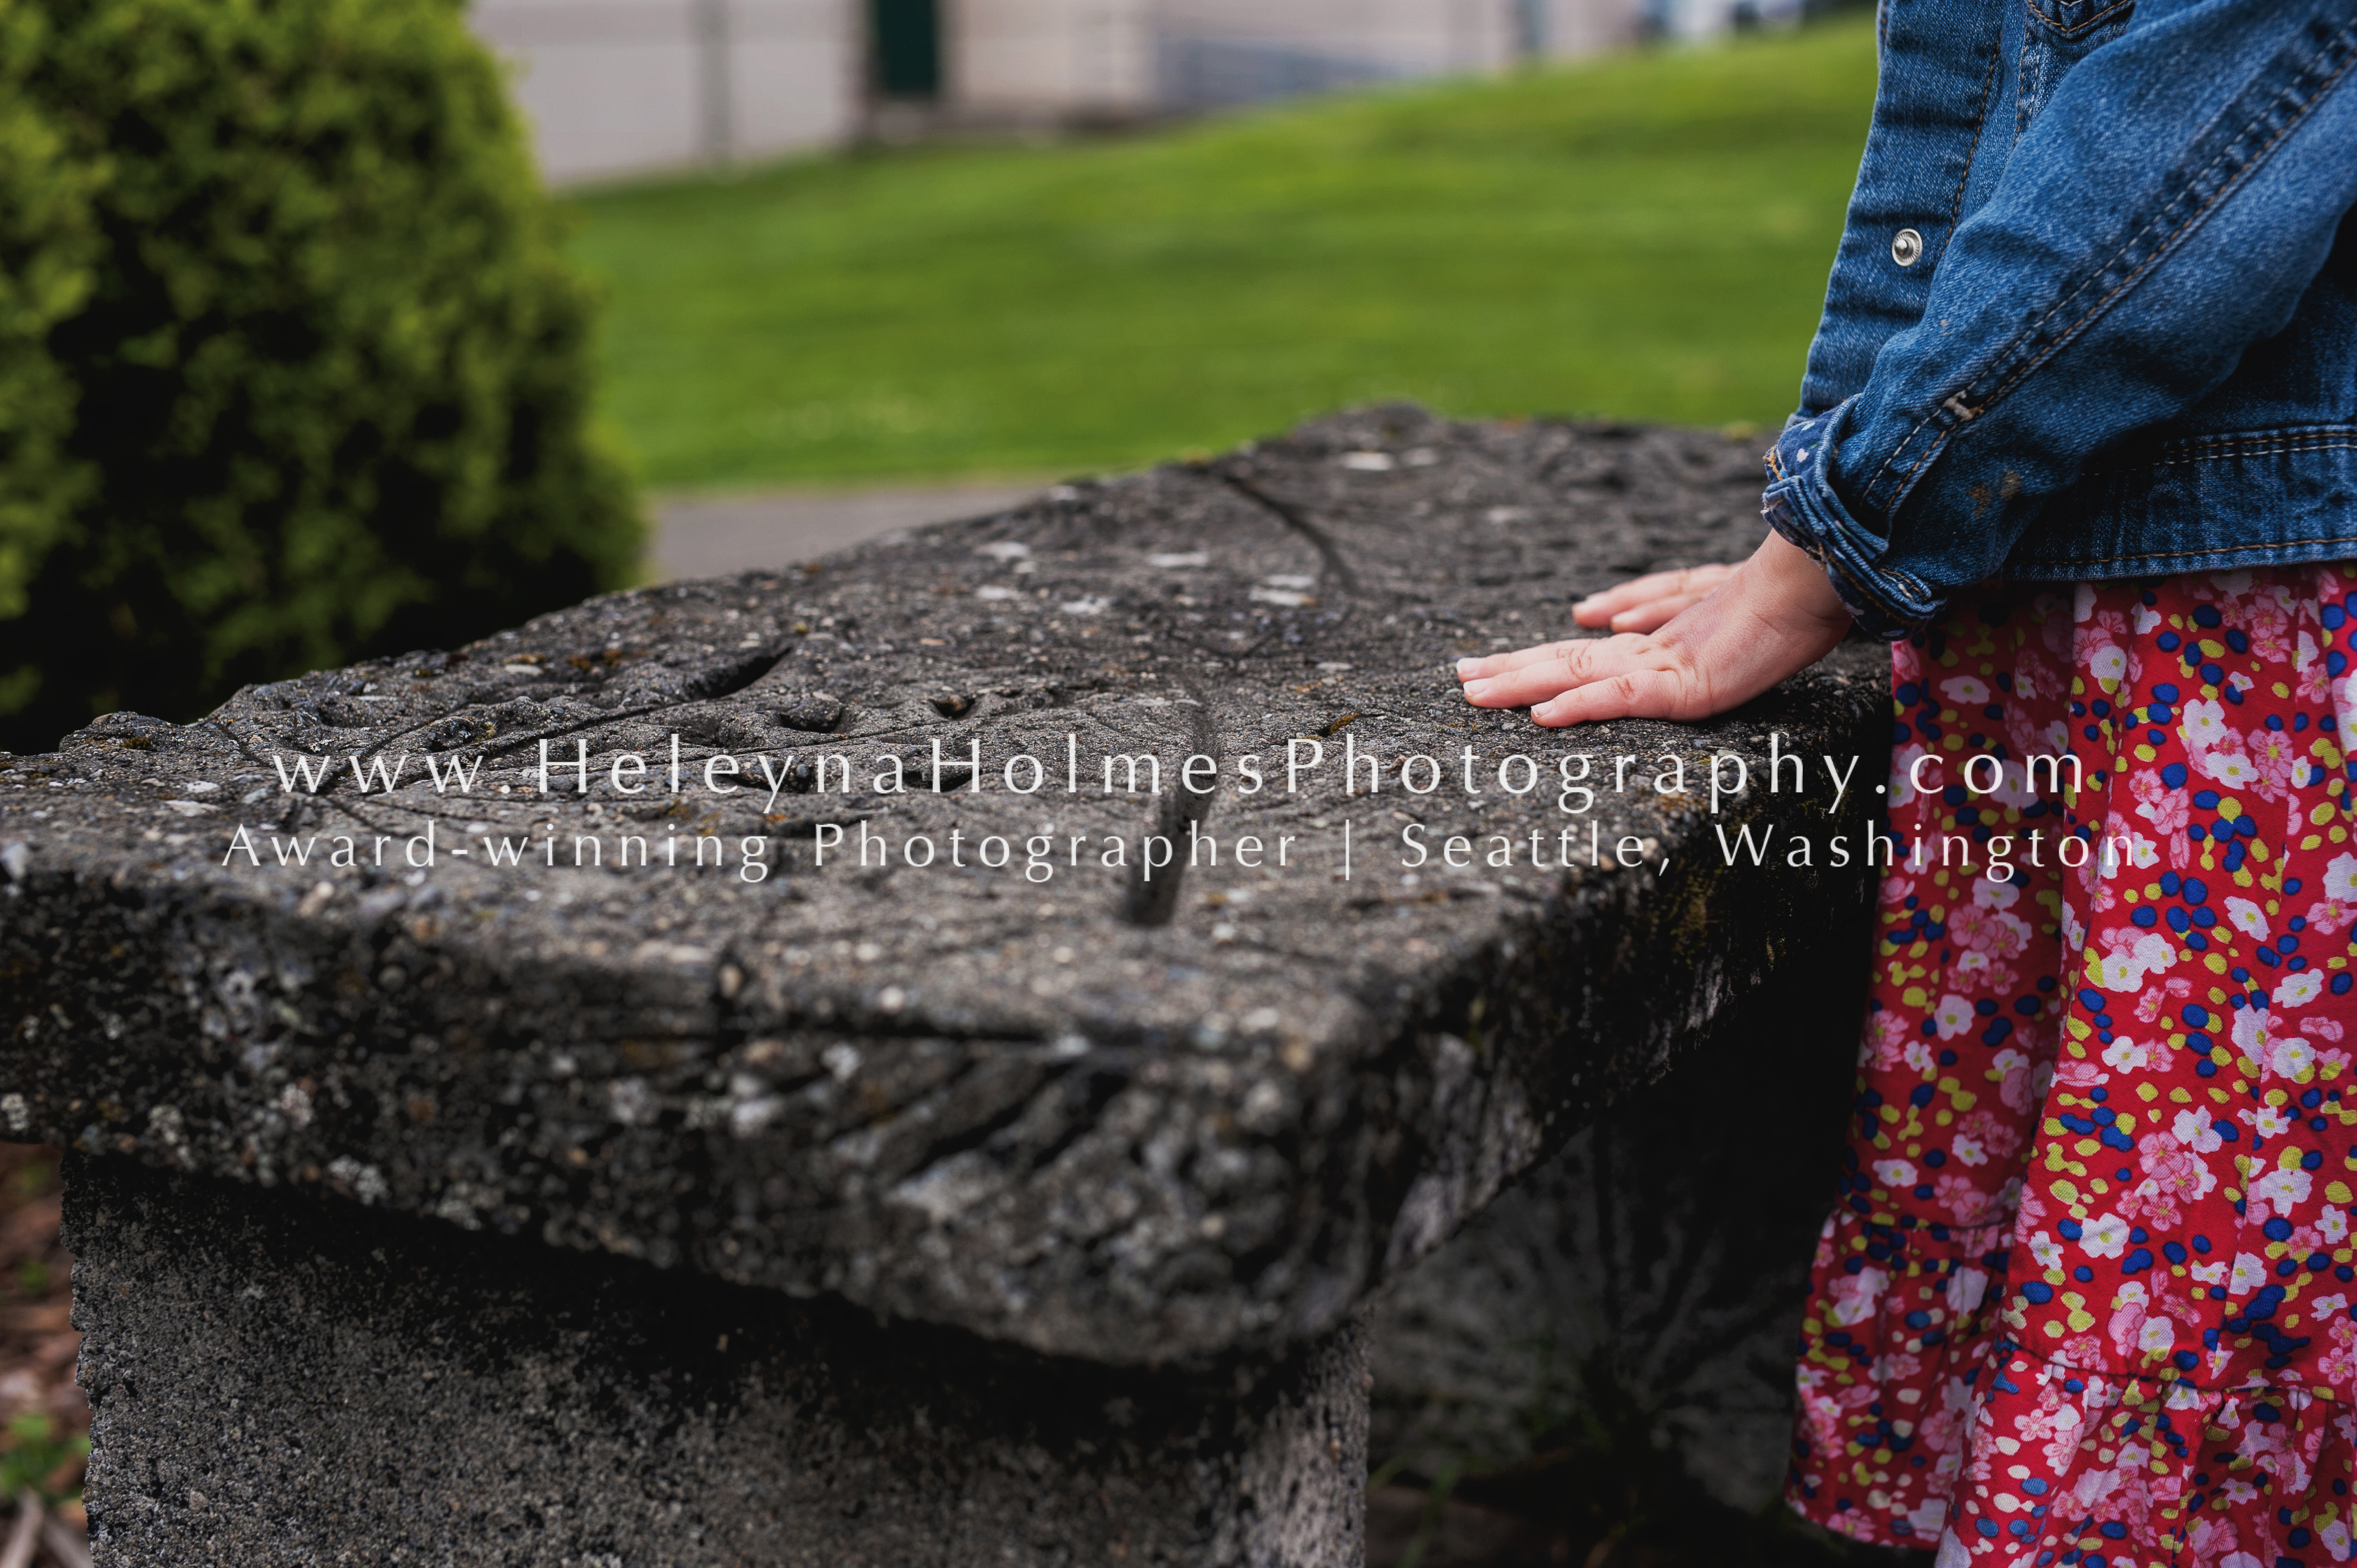 Heleyna Holmes Photography-Award-winning Photographer. Seattle, Washington